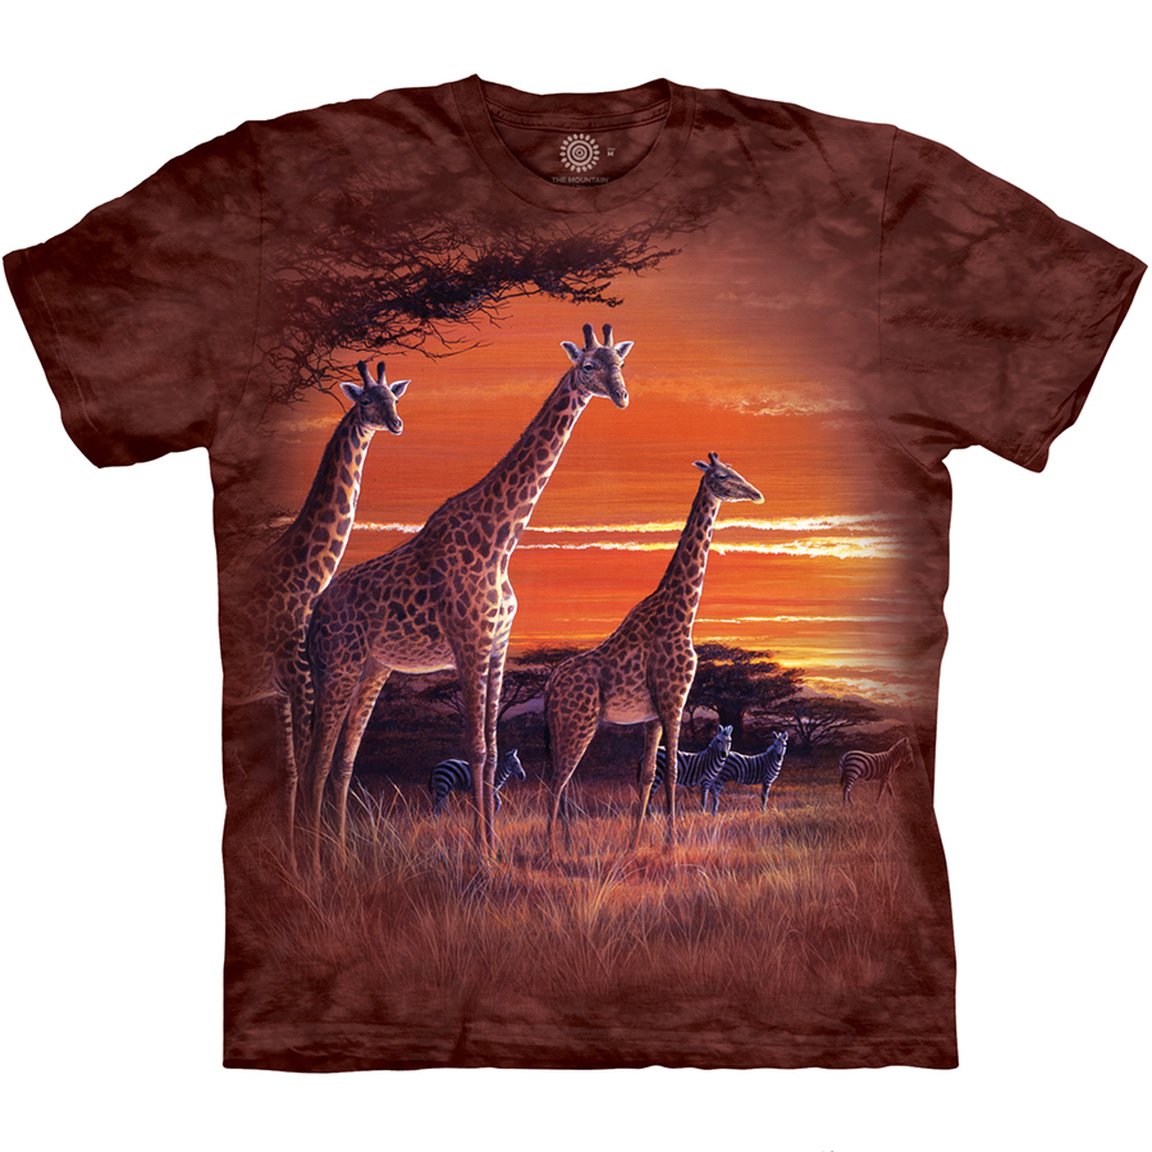 The Mountain Sundown - T-Shirt